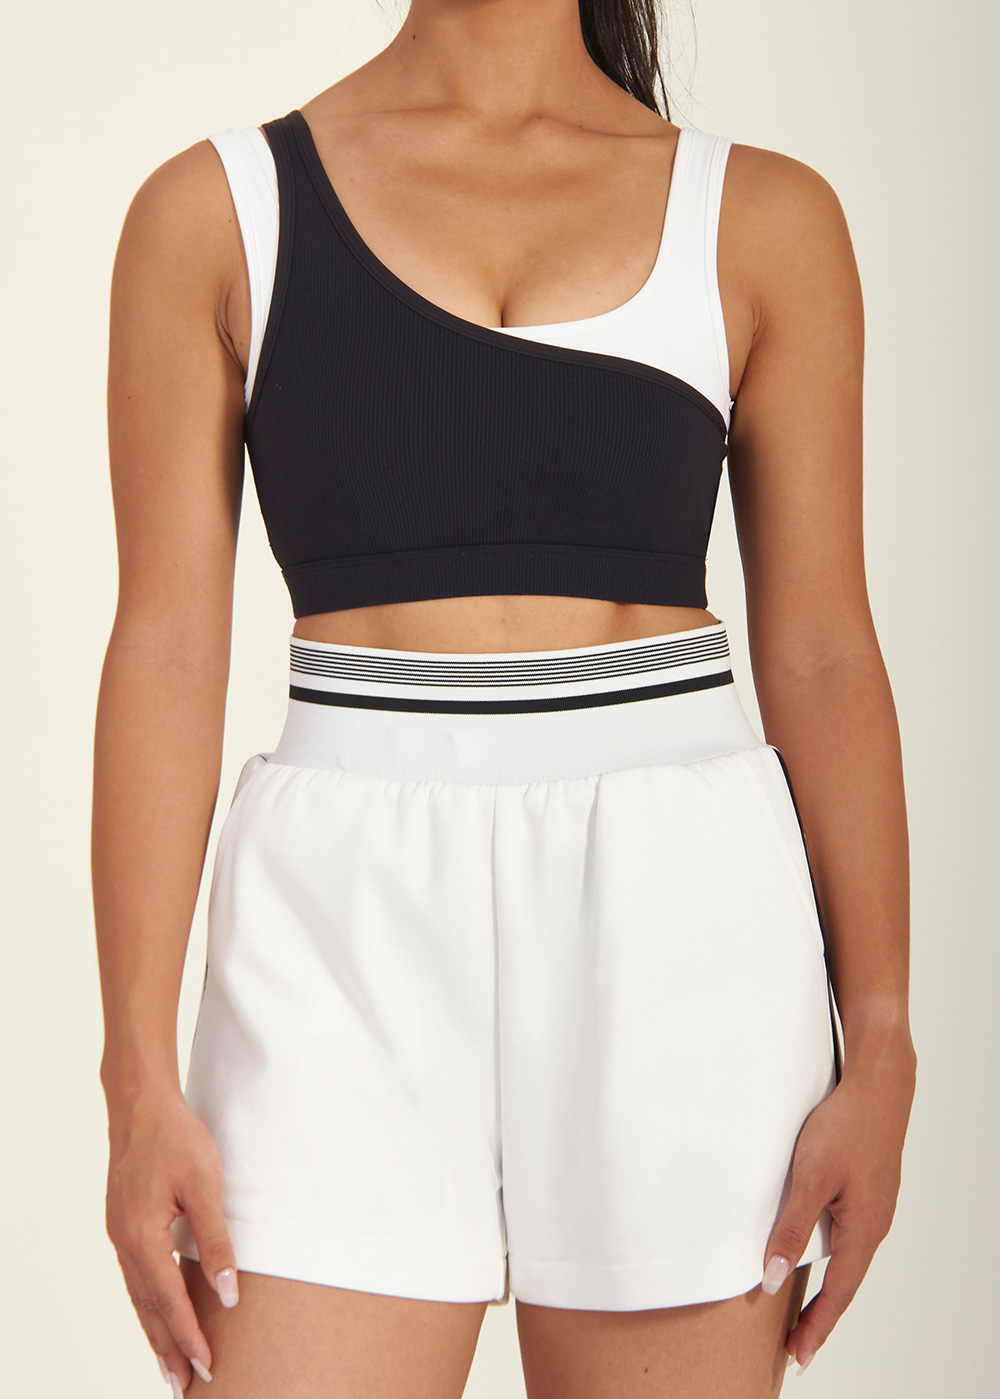 Customized Black White Sportswear Comfortable Bra Fitness Workout Basic Shorts 2 Pieces Set